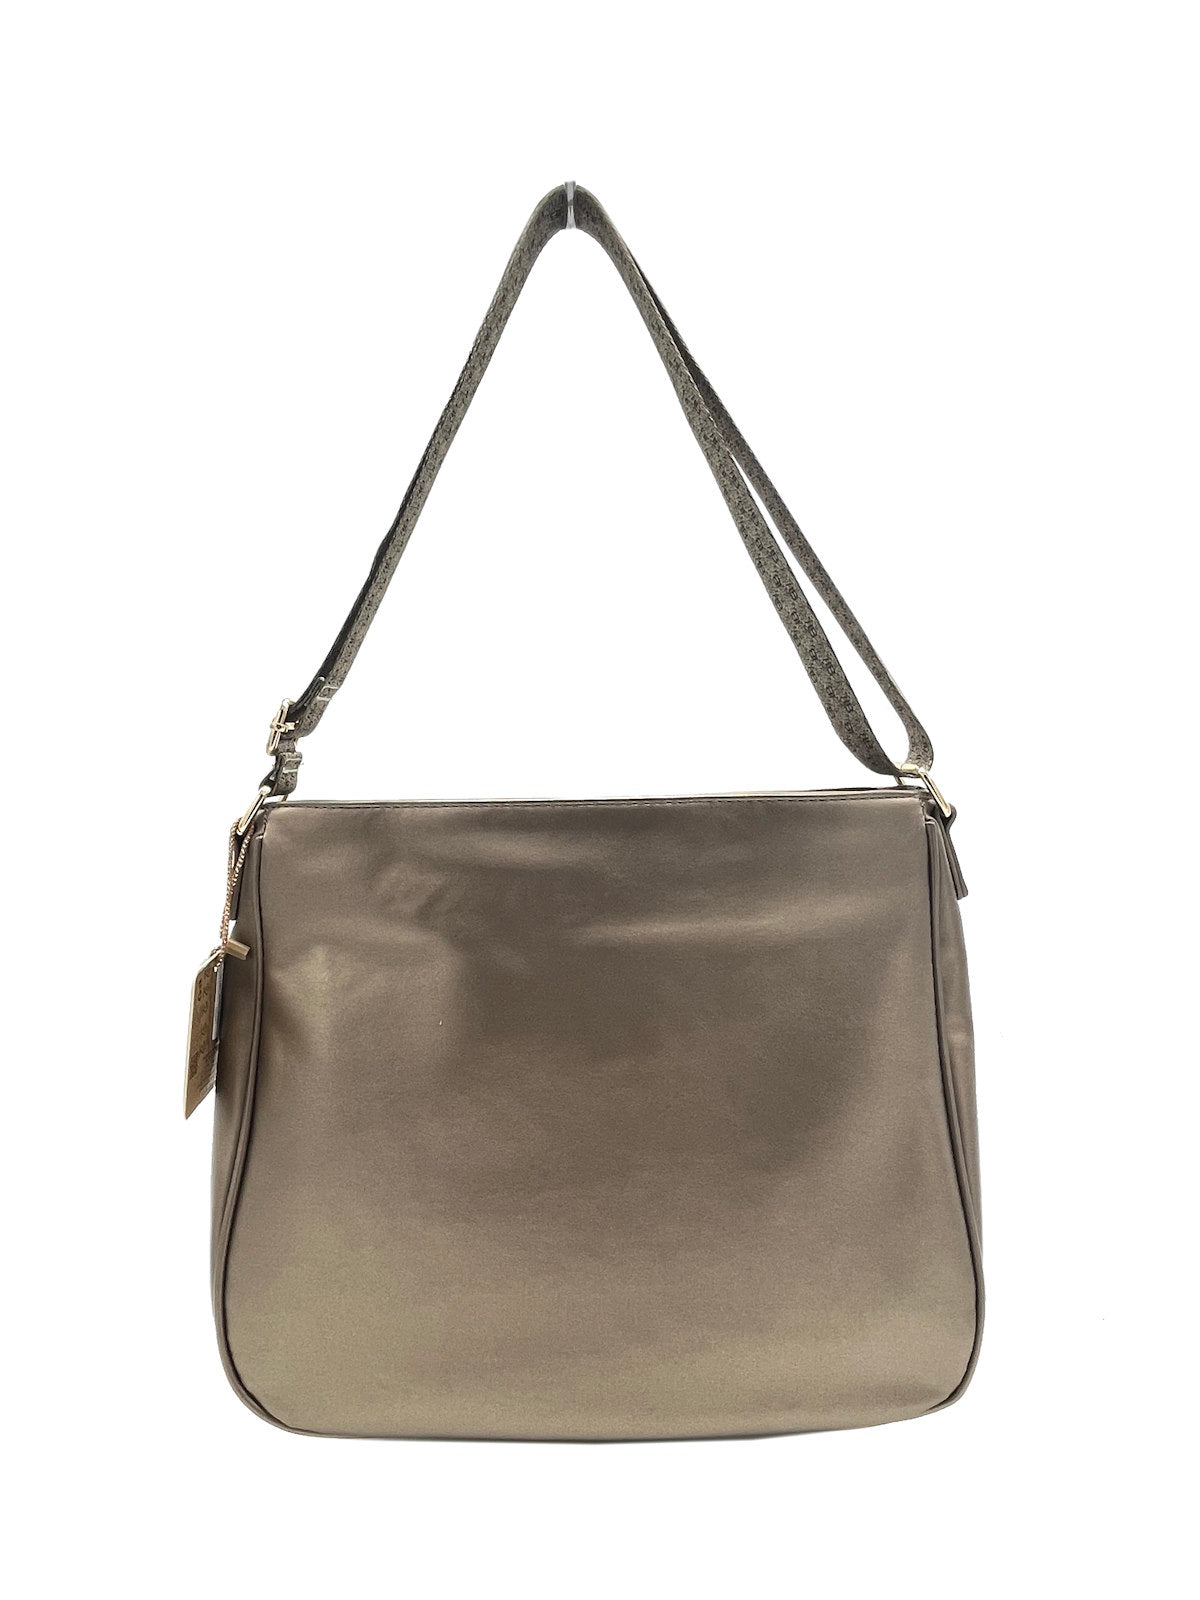 Eco leather shoulder bag, brand Laura Biagiotti, art. LB106-5